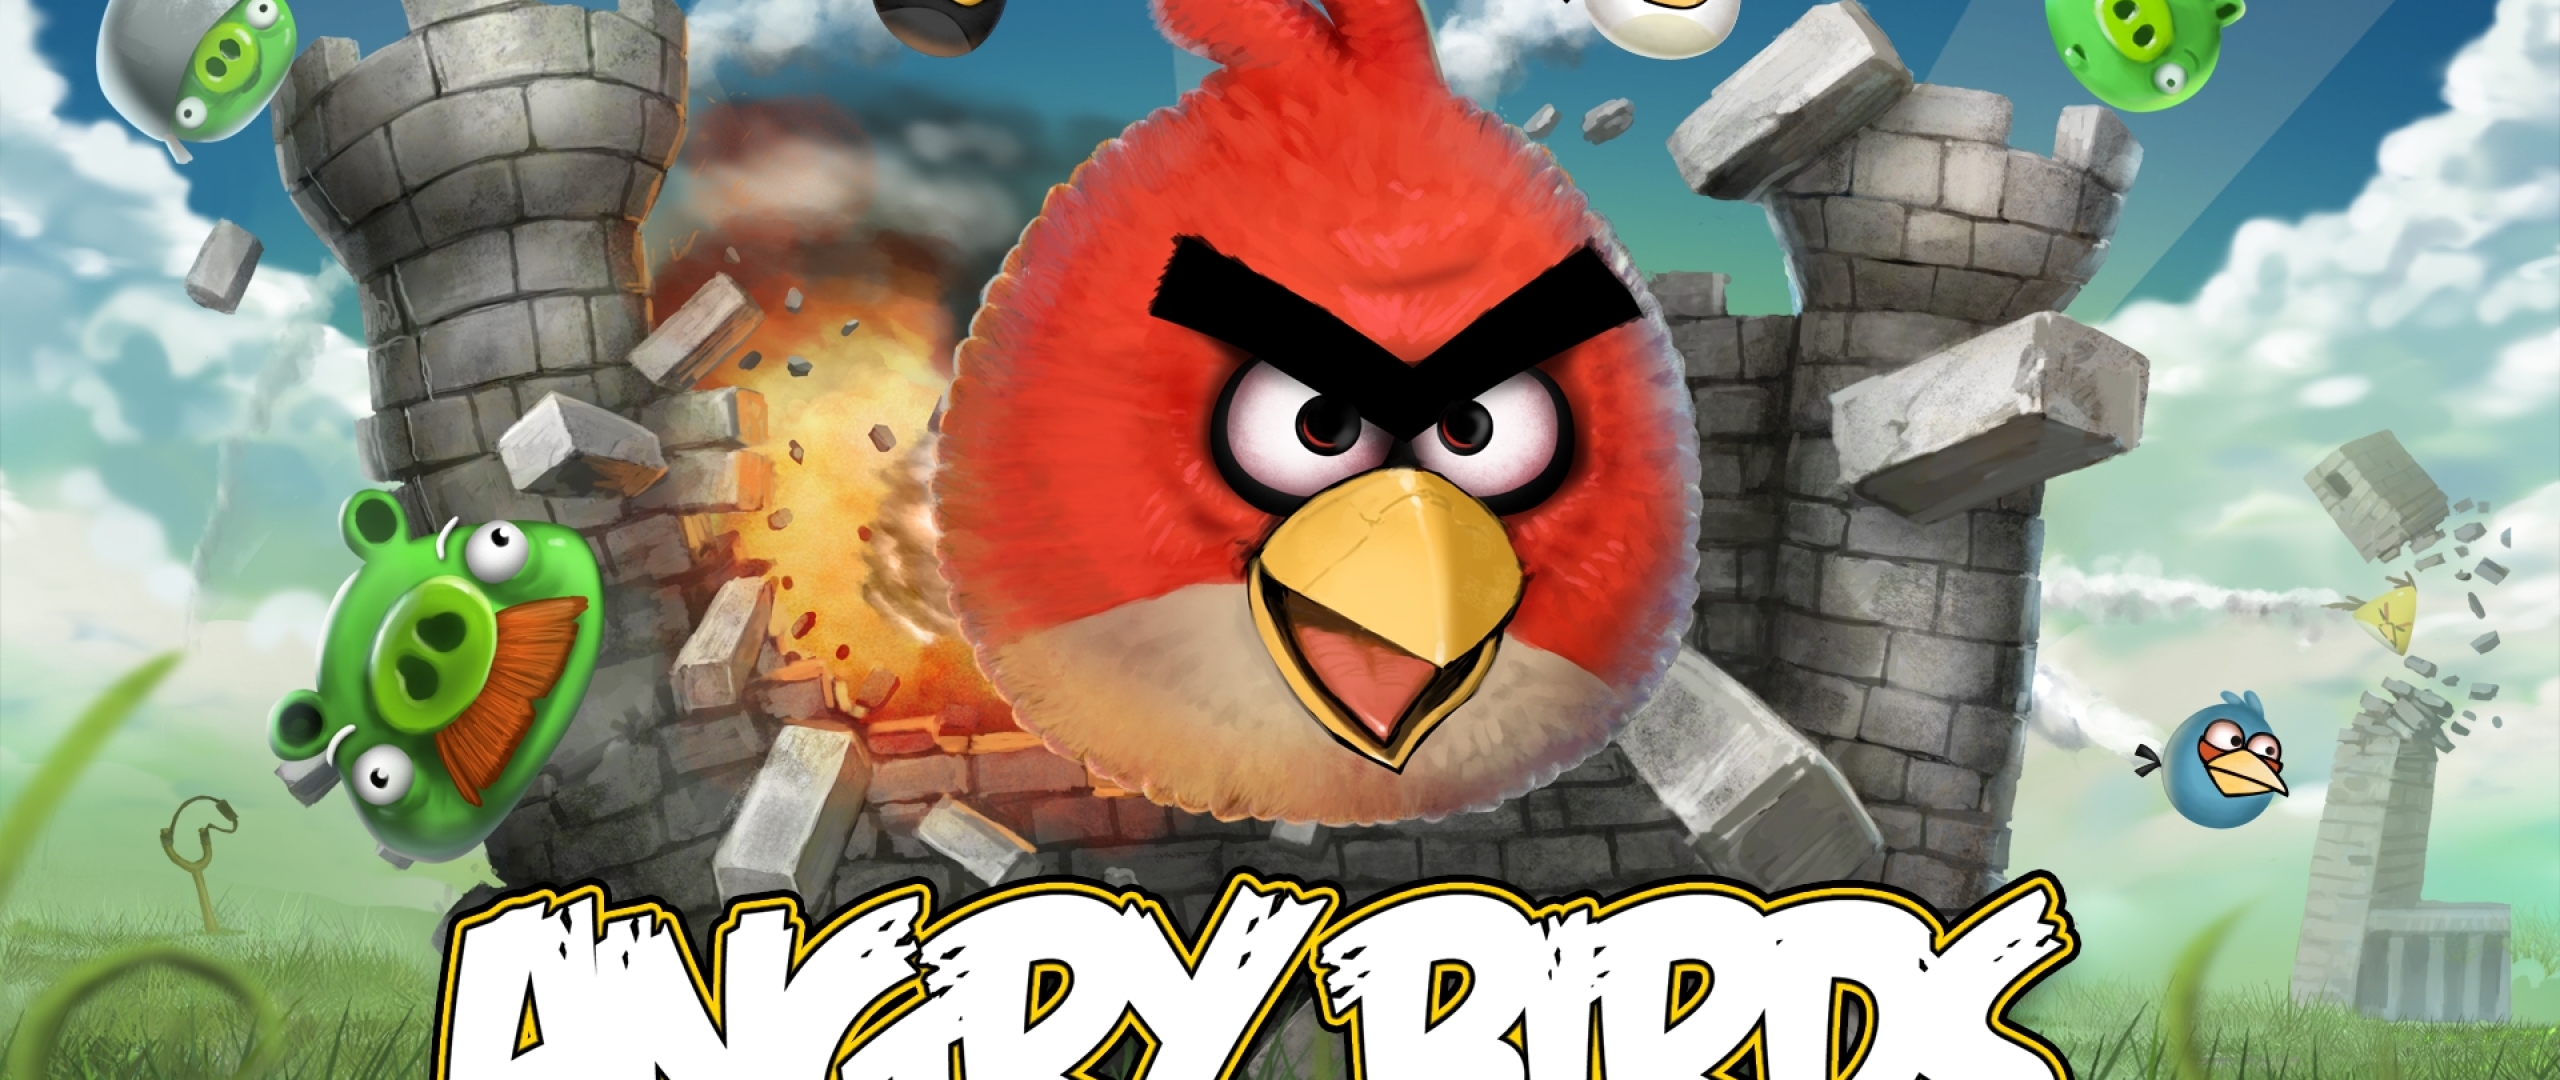 Энгри бердз бласт. Игра Angry Birds Classic. Энгри бердз игра первая версия. Angry Birds китайская версия. Игра Энгри бердз 2 злые птицы.